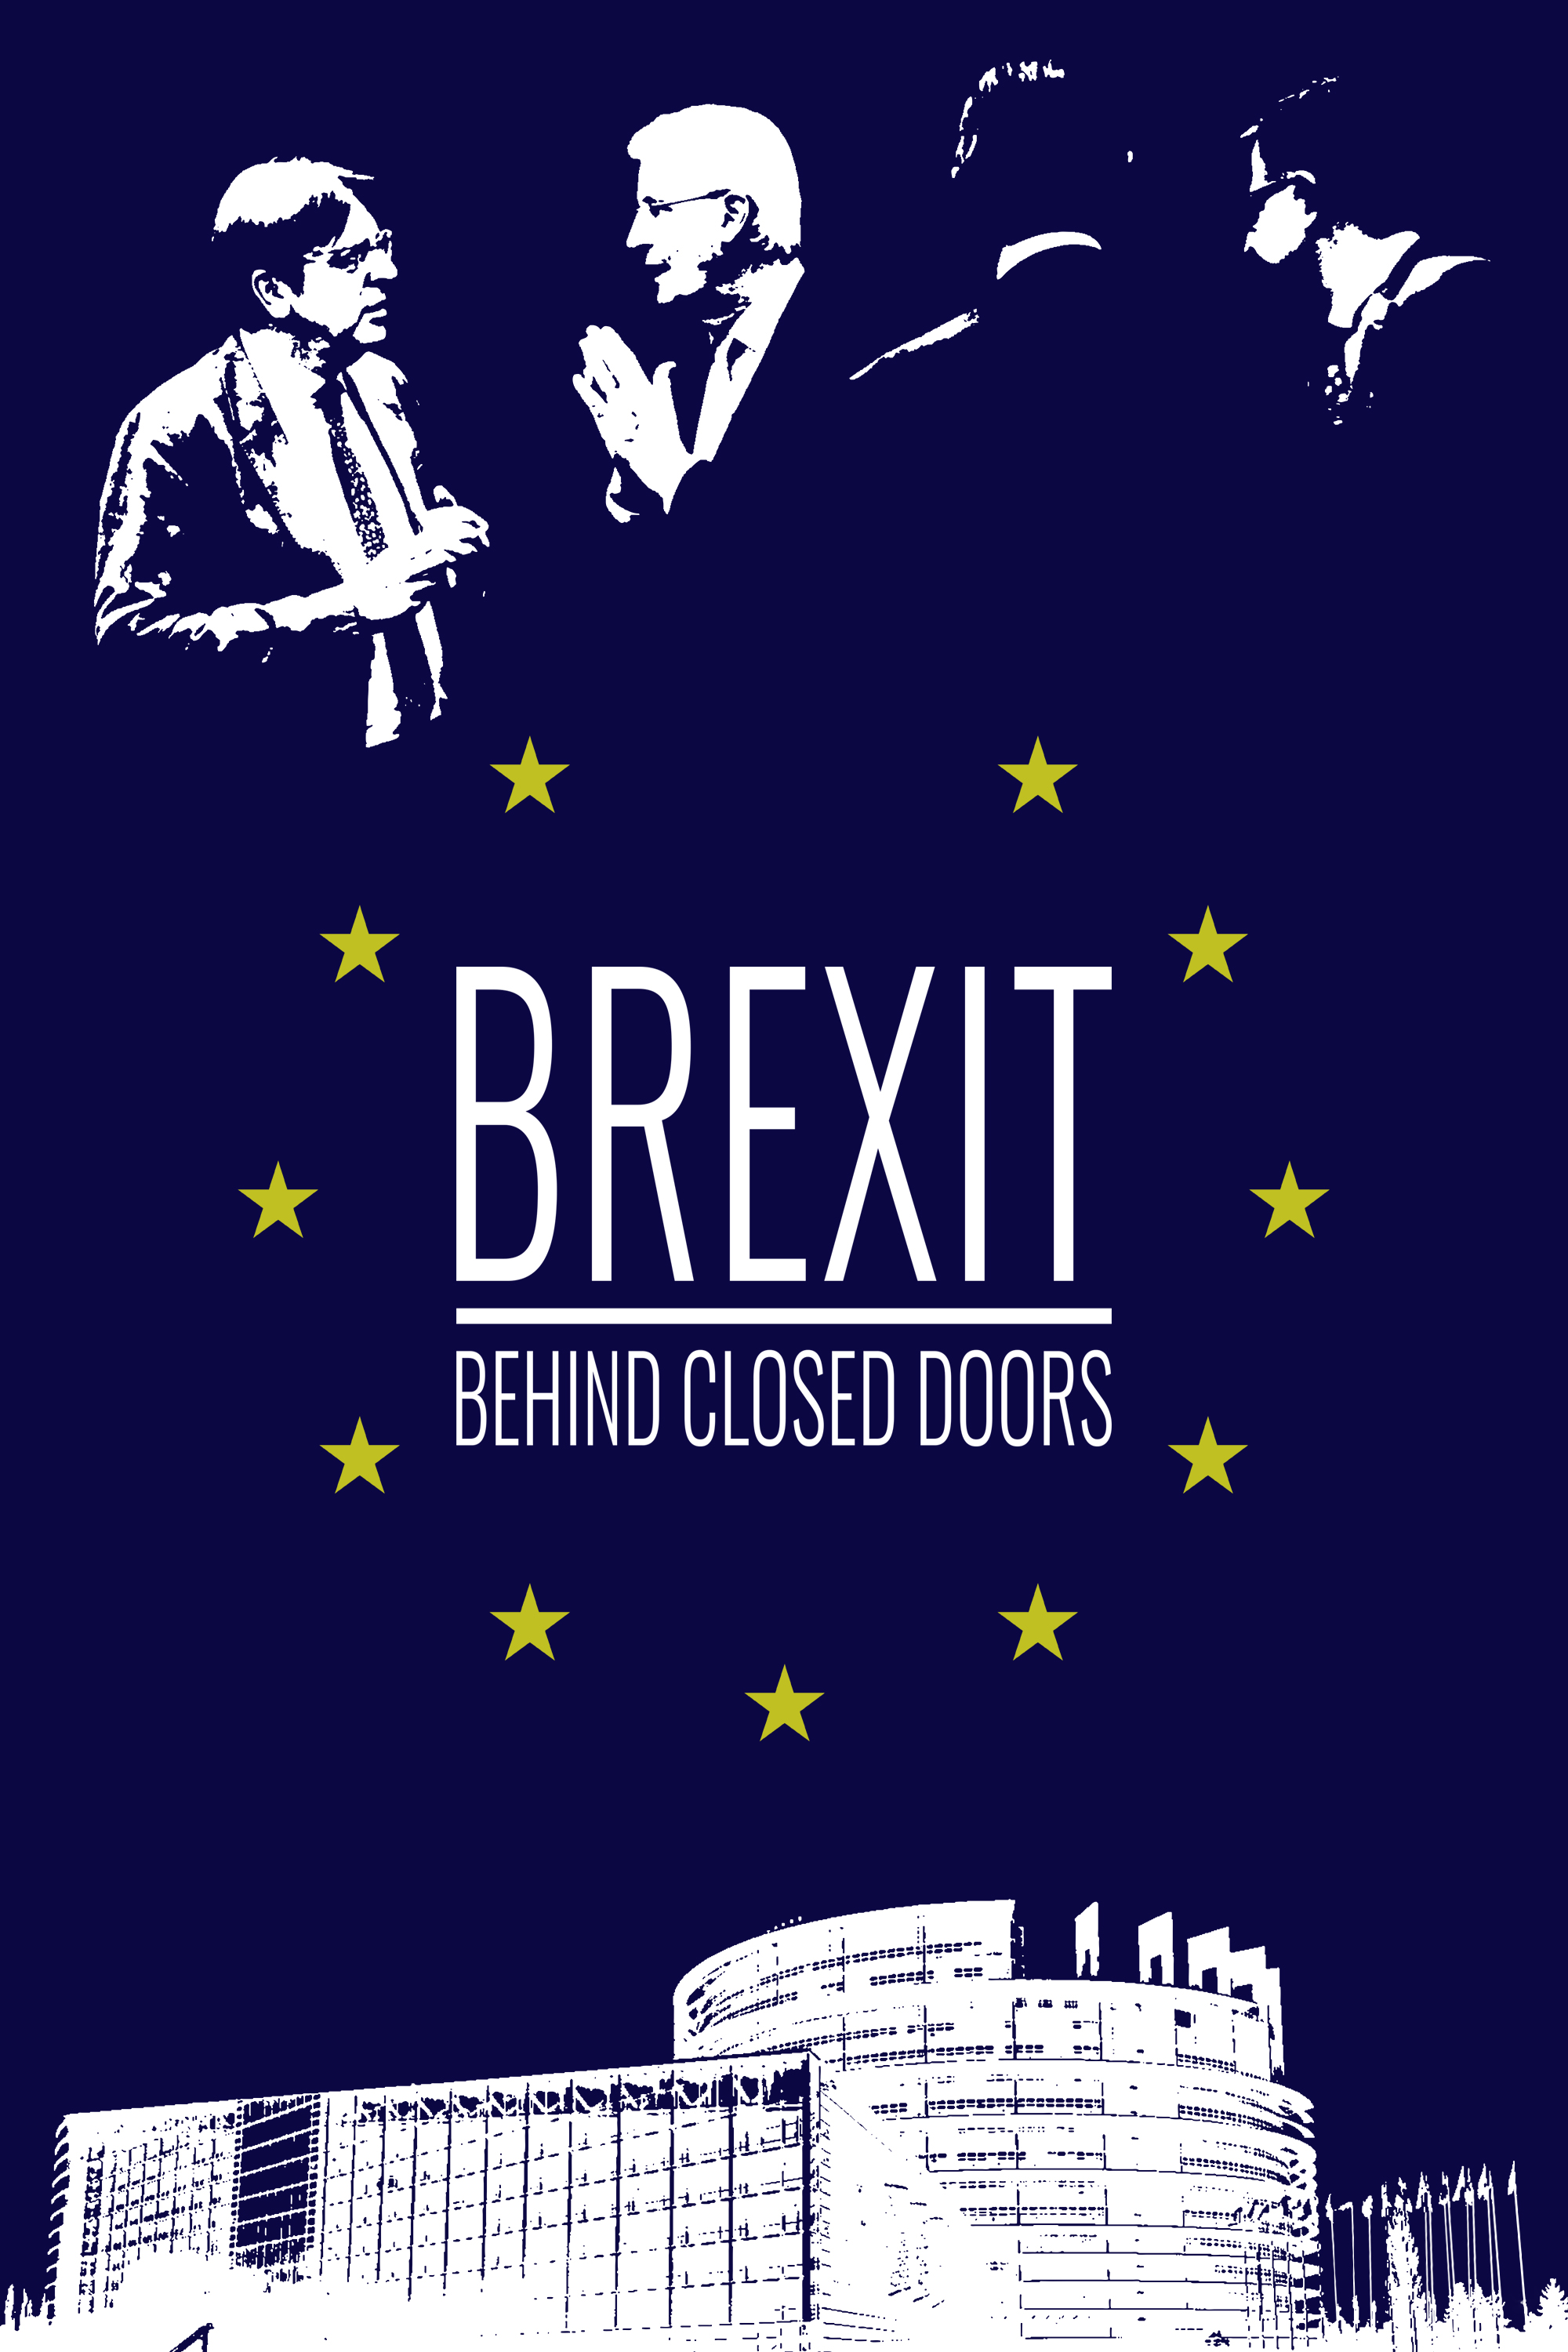     Brexit: Behind Closed Doors